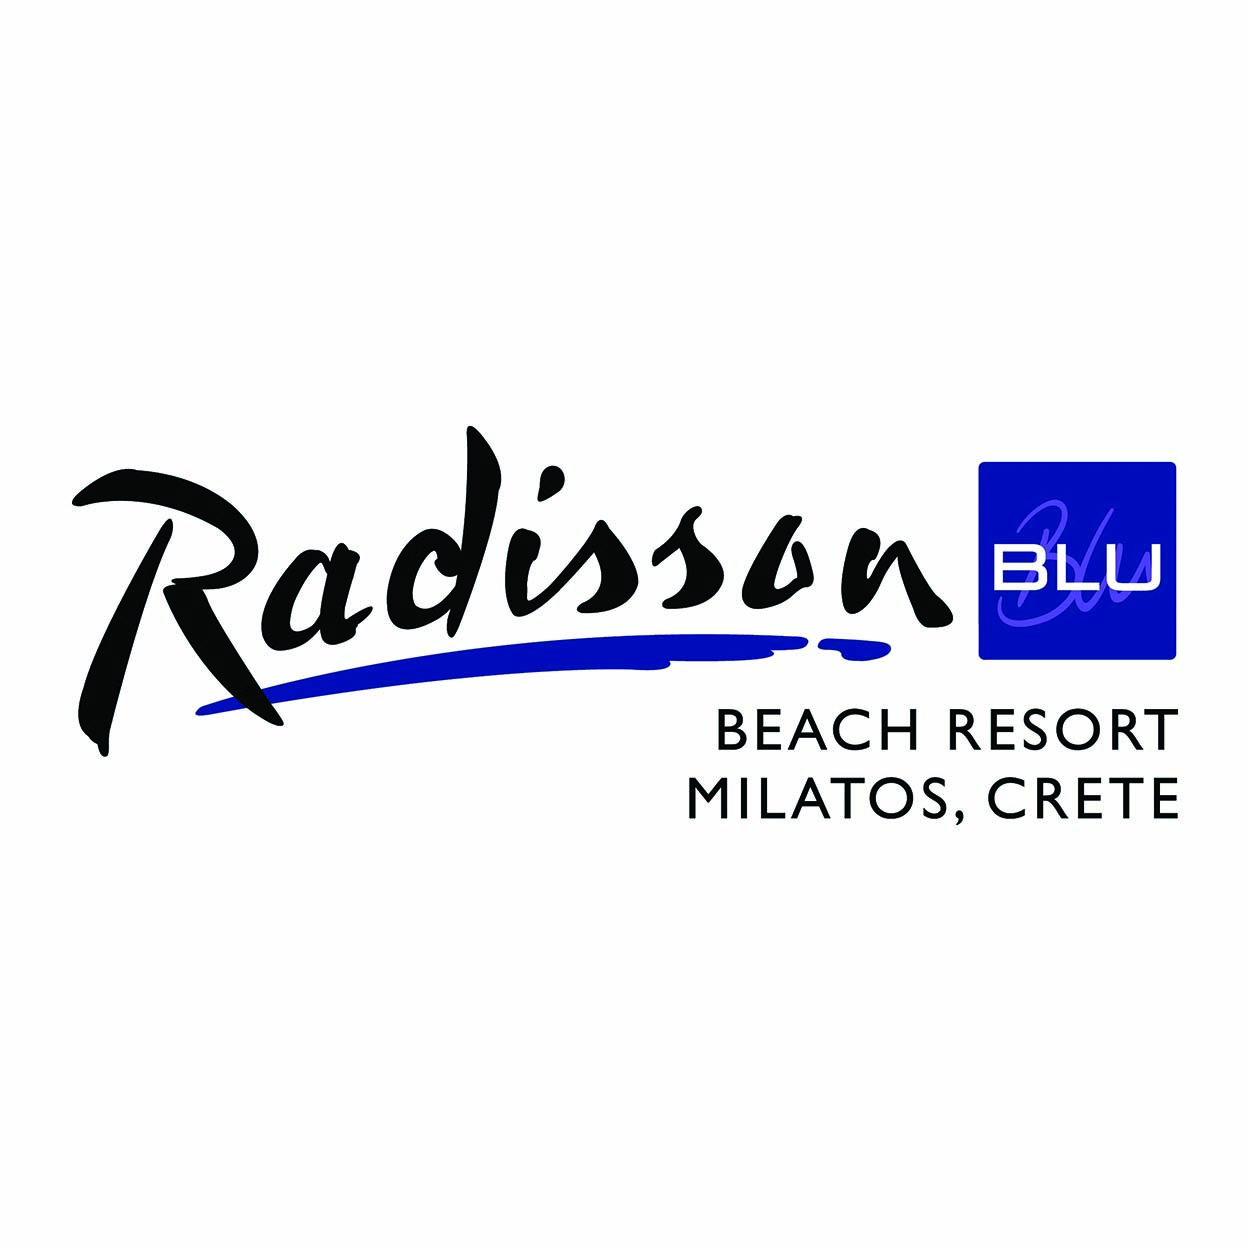 RADISSON BLUE